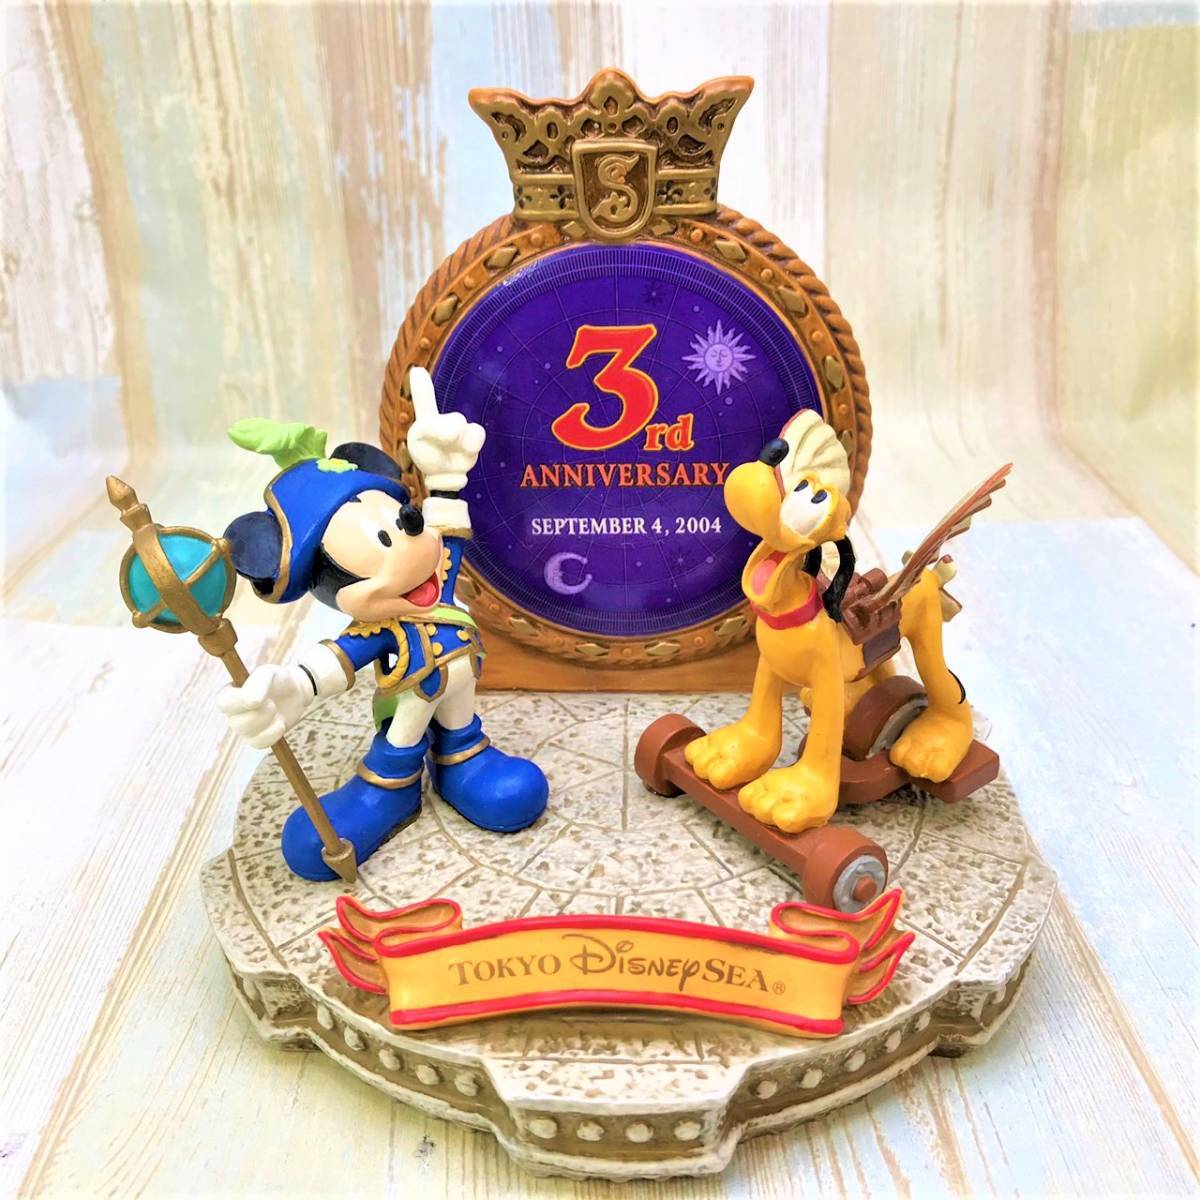  limited goods rare * Disney si- open 3 anniversary commemoration Mickey Mouse Mickey Pluto figure Disney Sea Anniversary * ceramics made ornament 